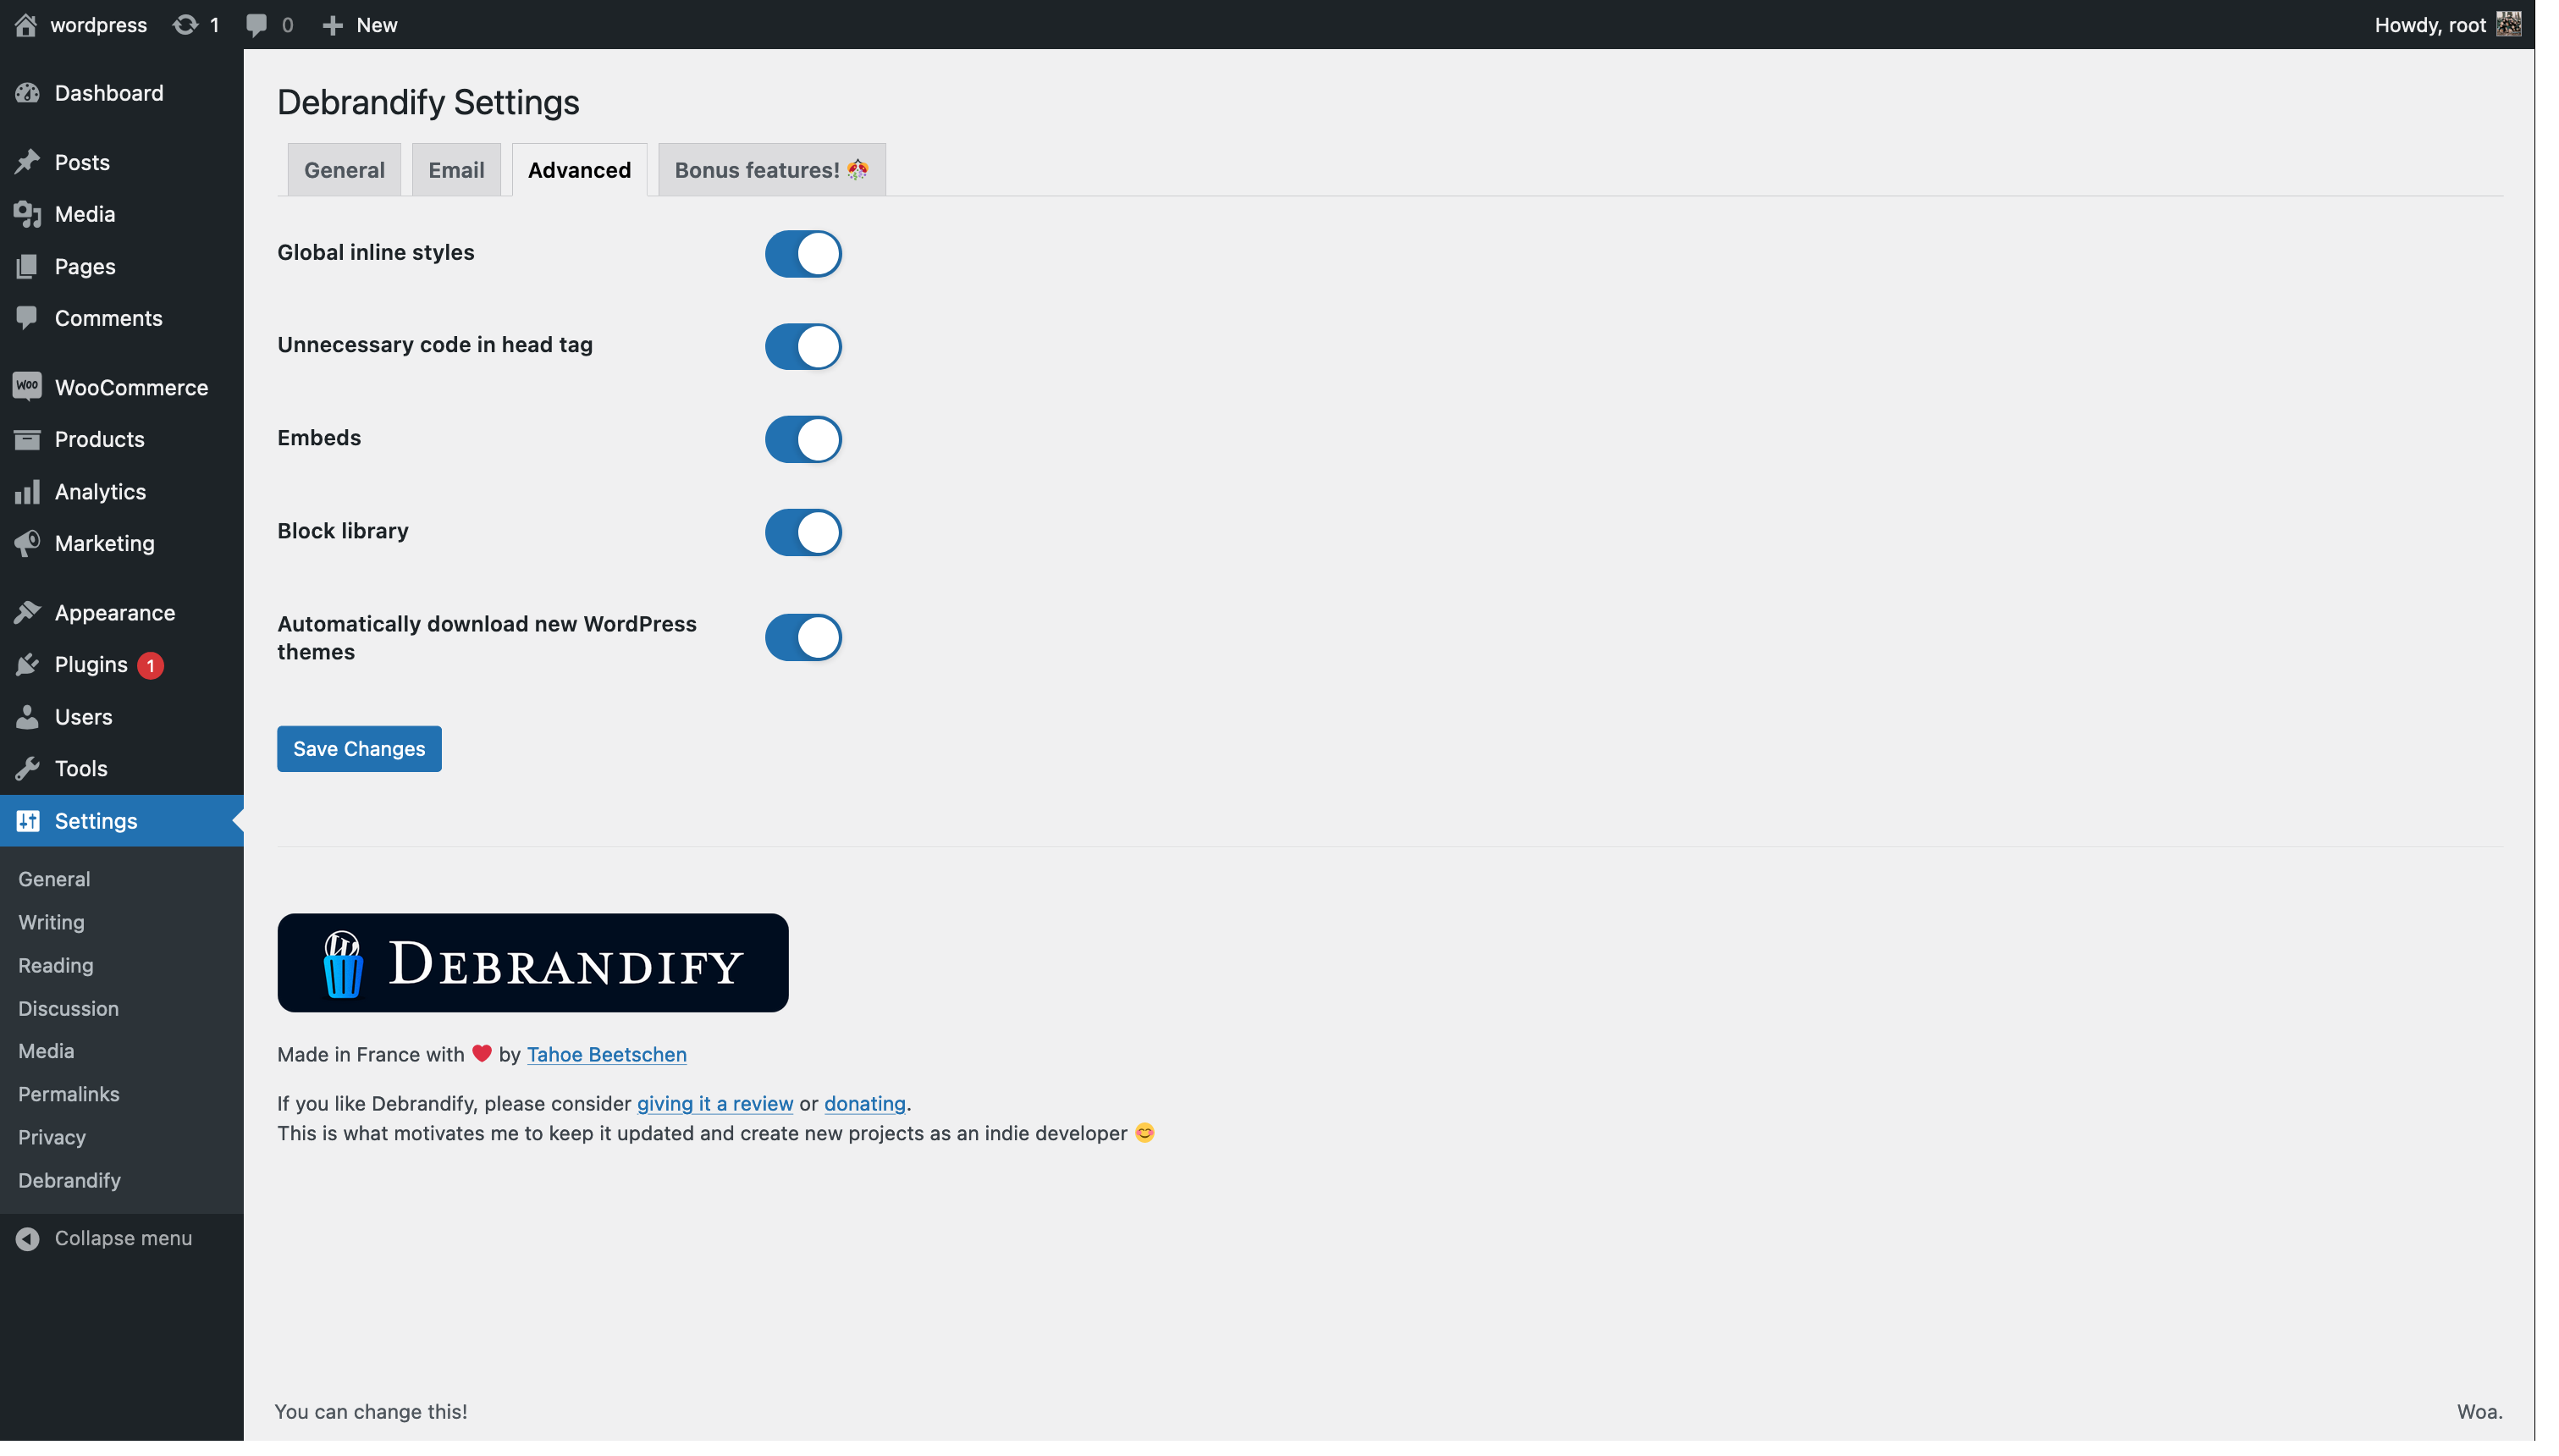 Debrandify's advanced settings